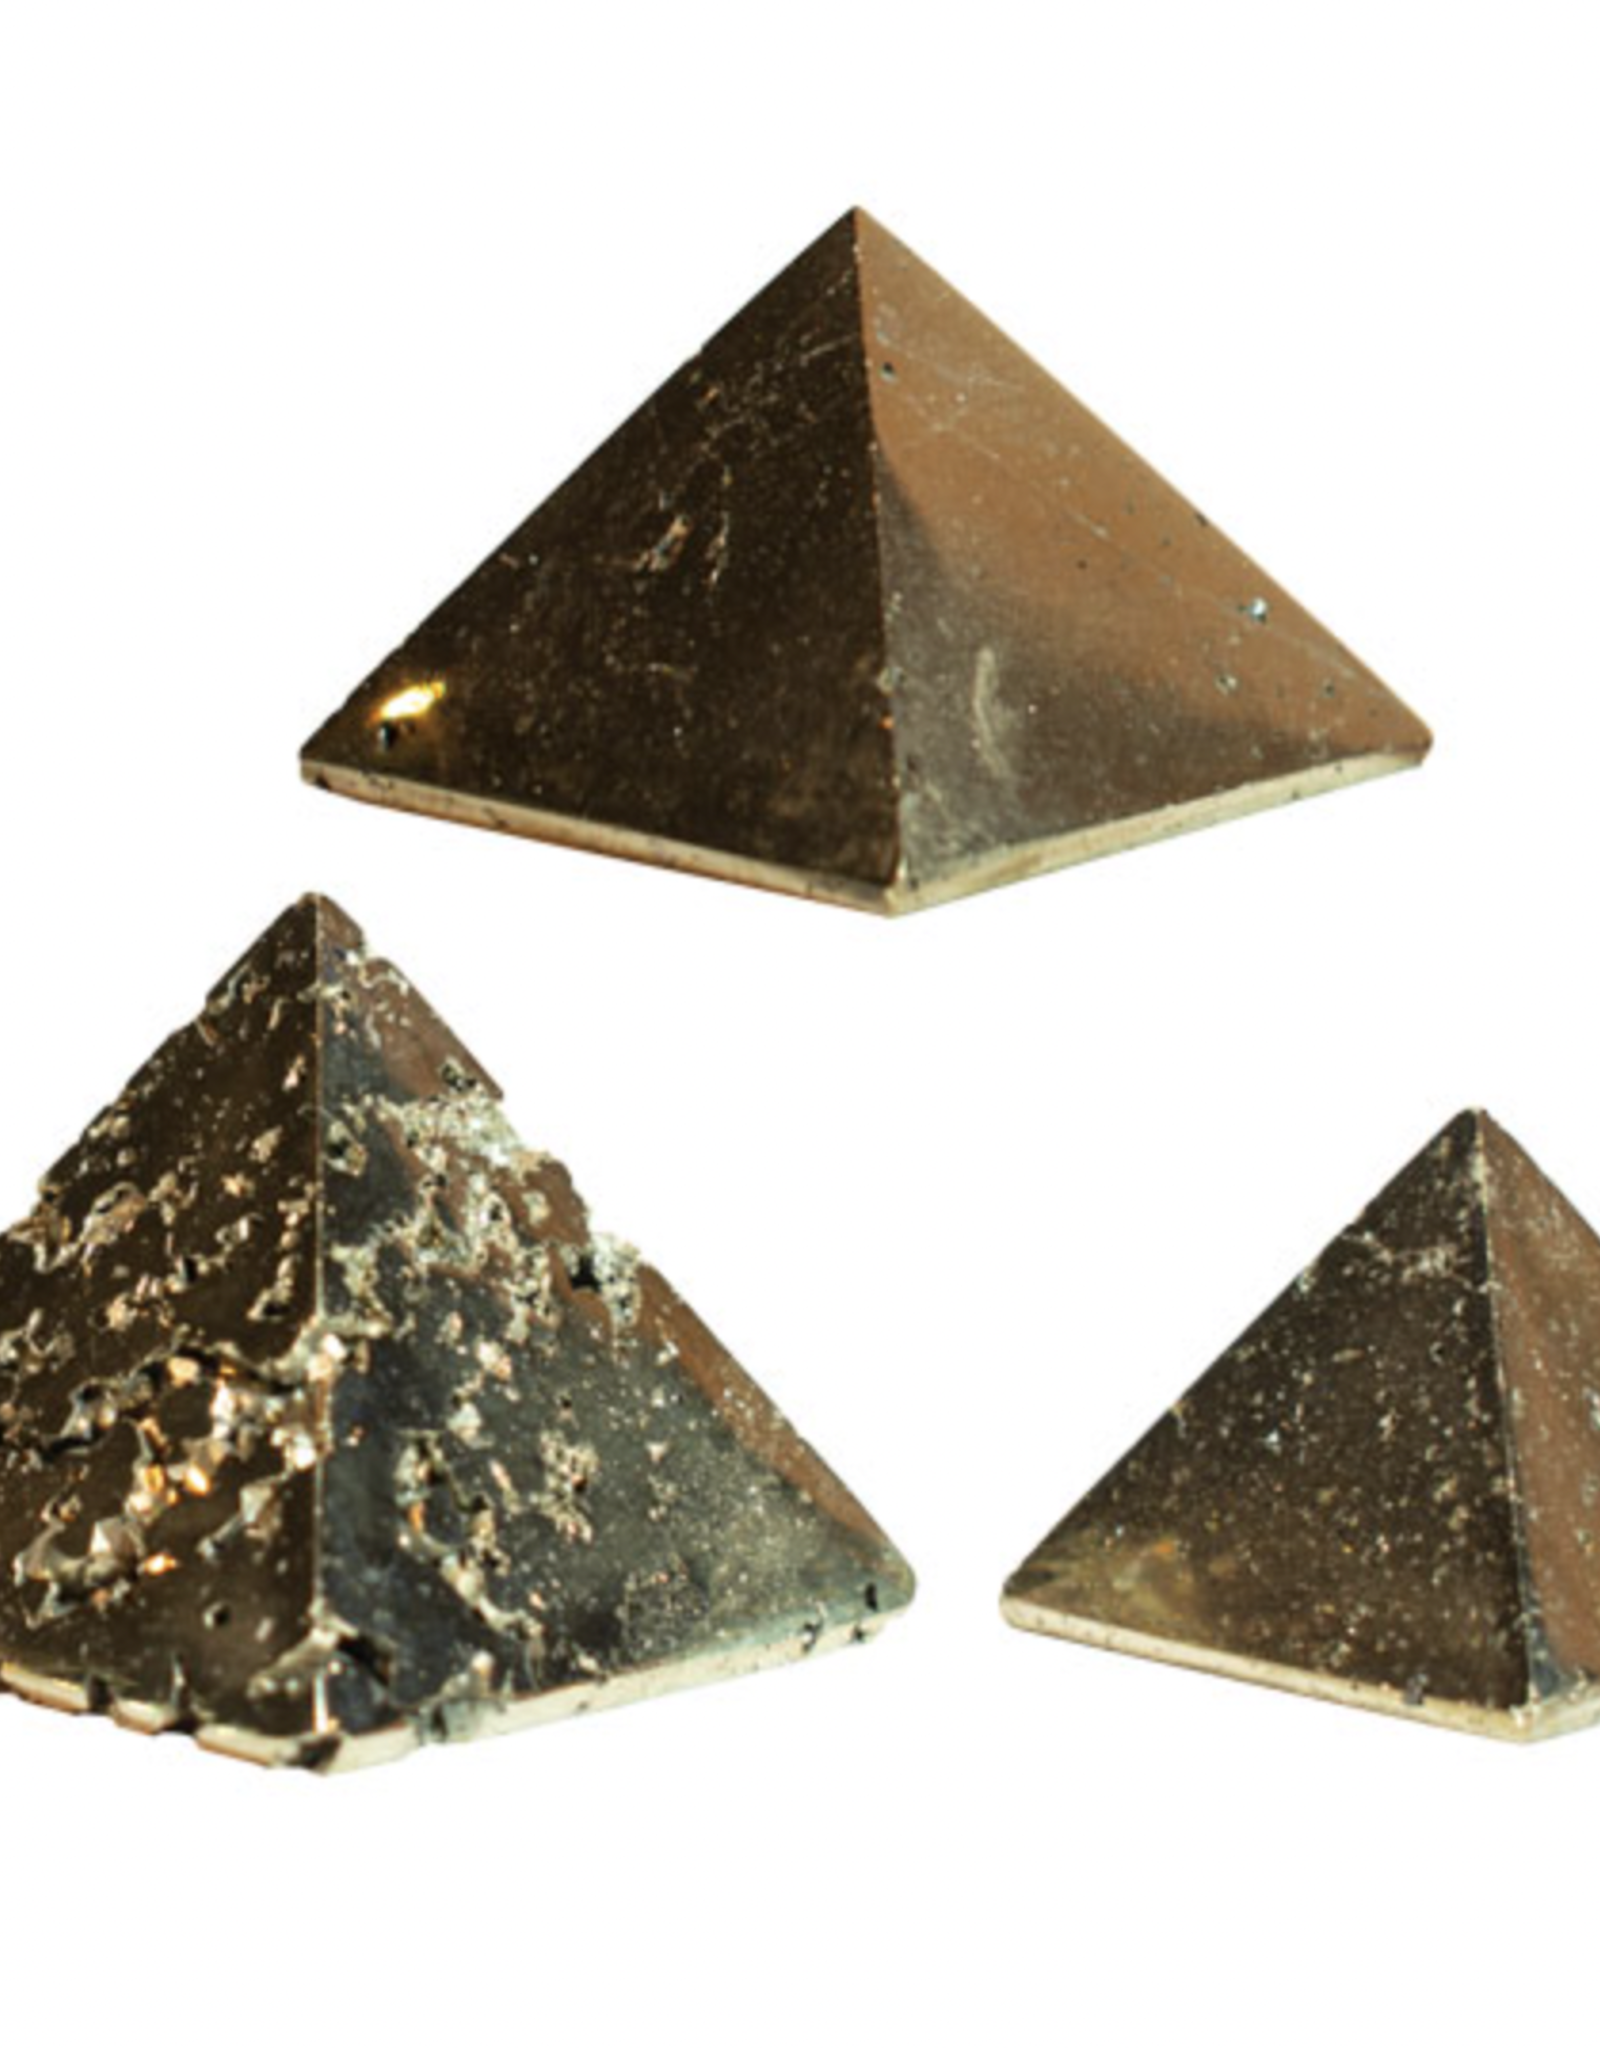 Pyramid - Pyrite